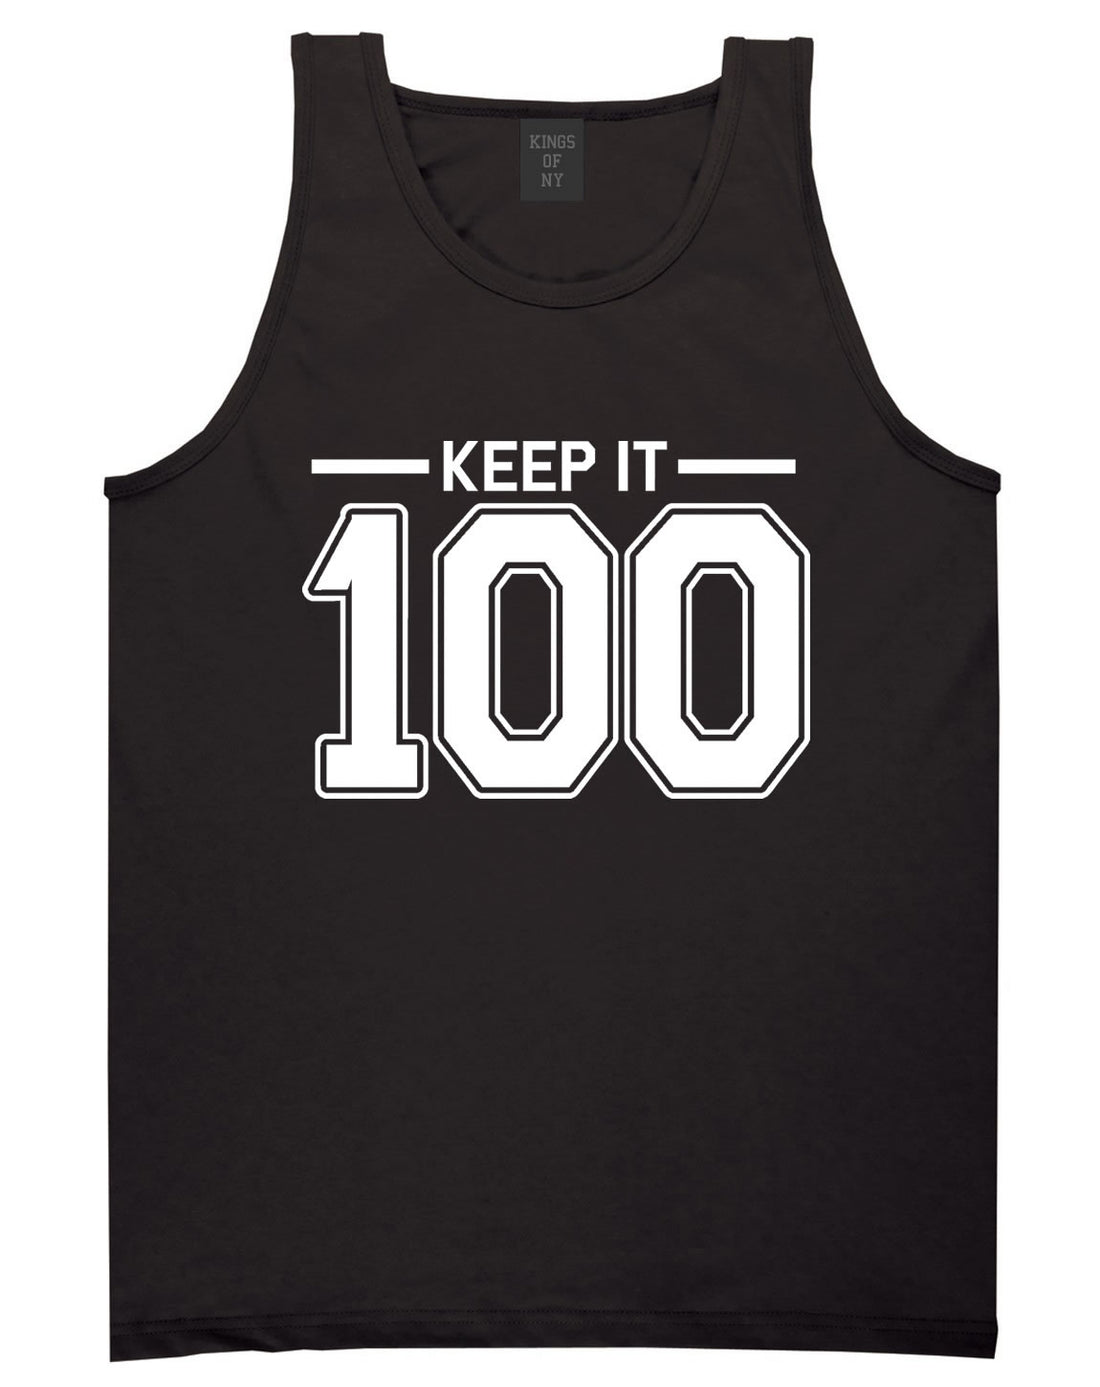 Keep It 100 Tank Top in Black by Kings Of NY